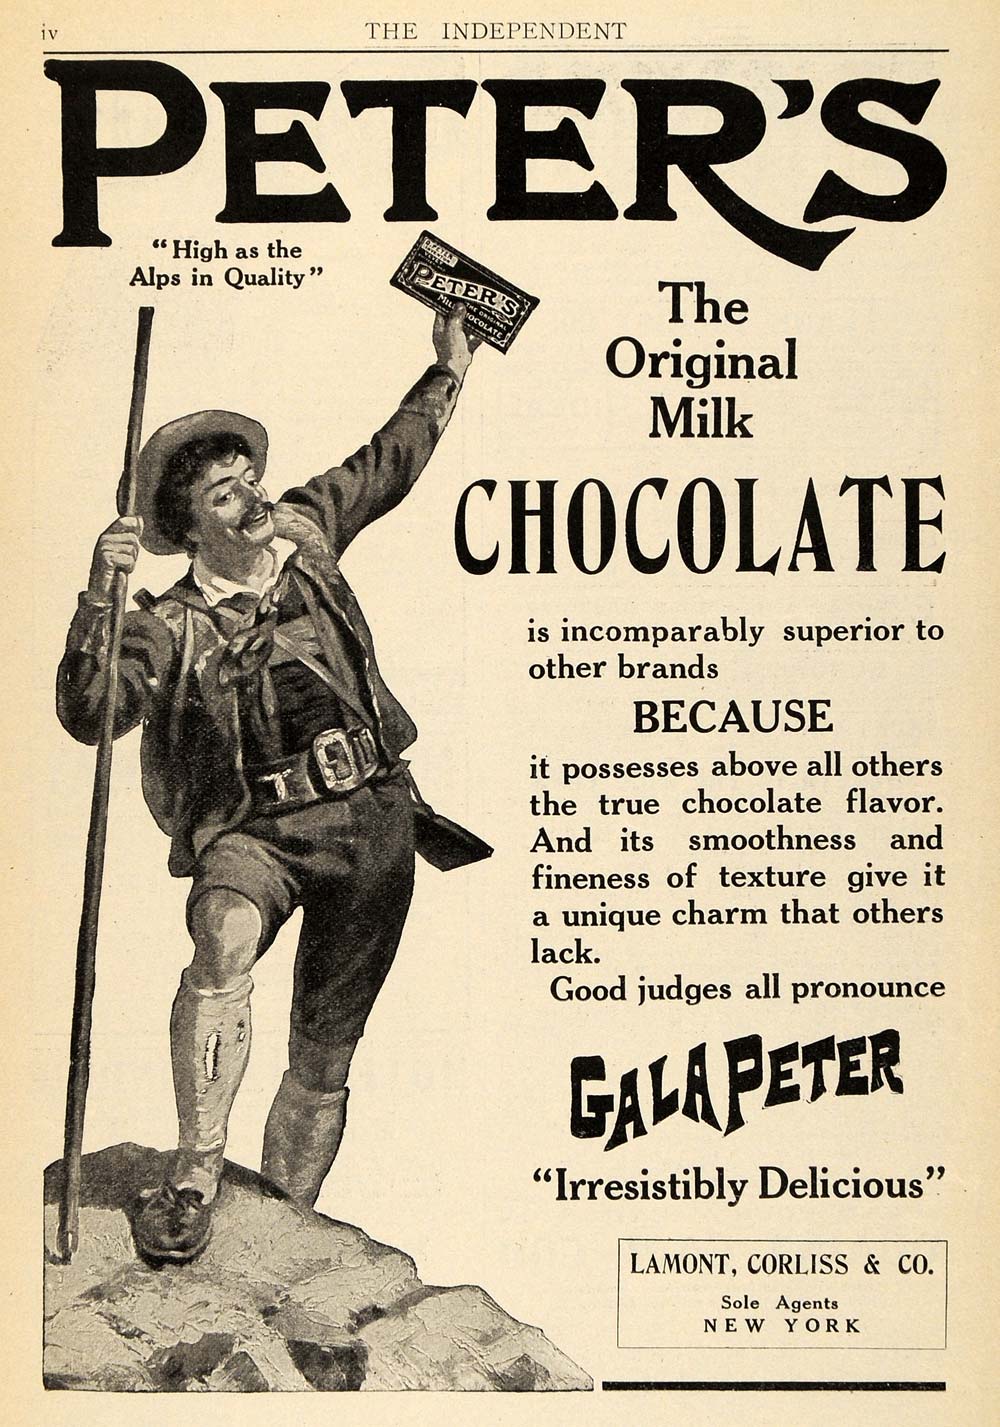 1909 Ad Peters Galapeter Milk Chocolate Lamont Corliss - ORIGINAL TIN4